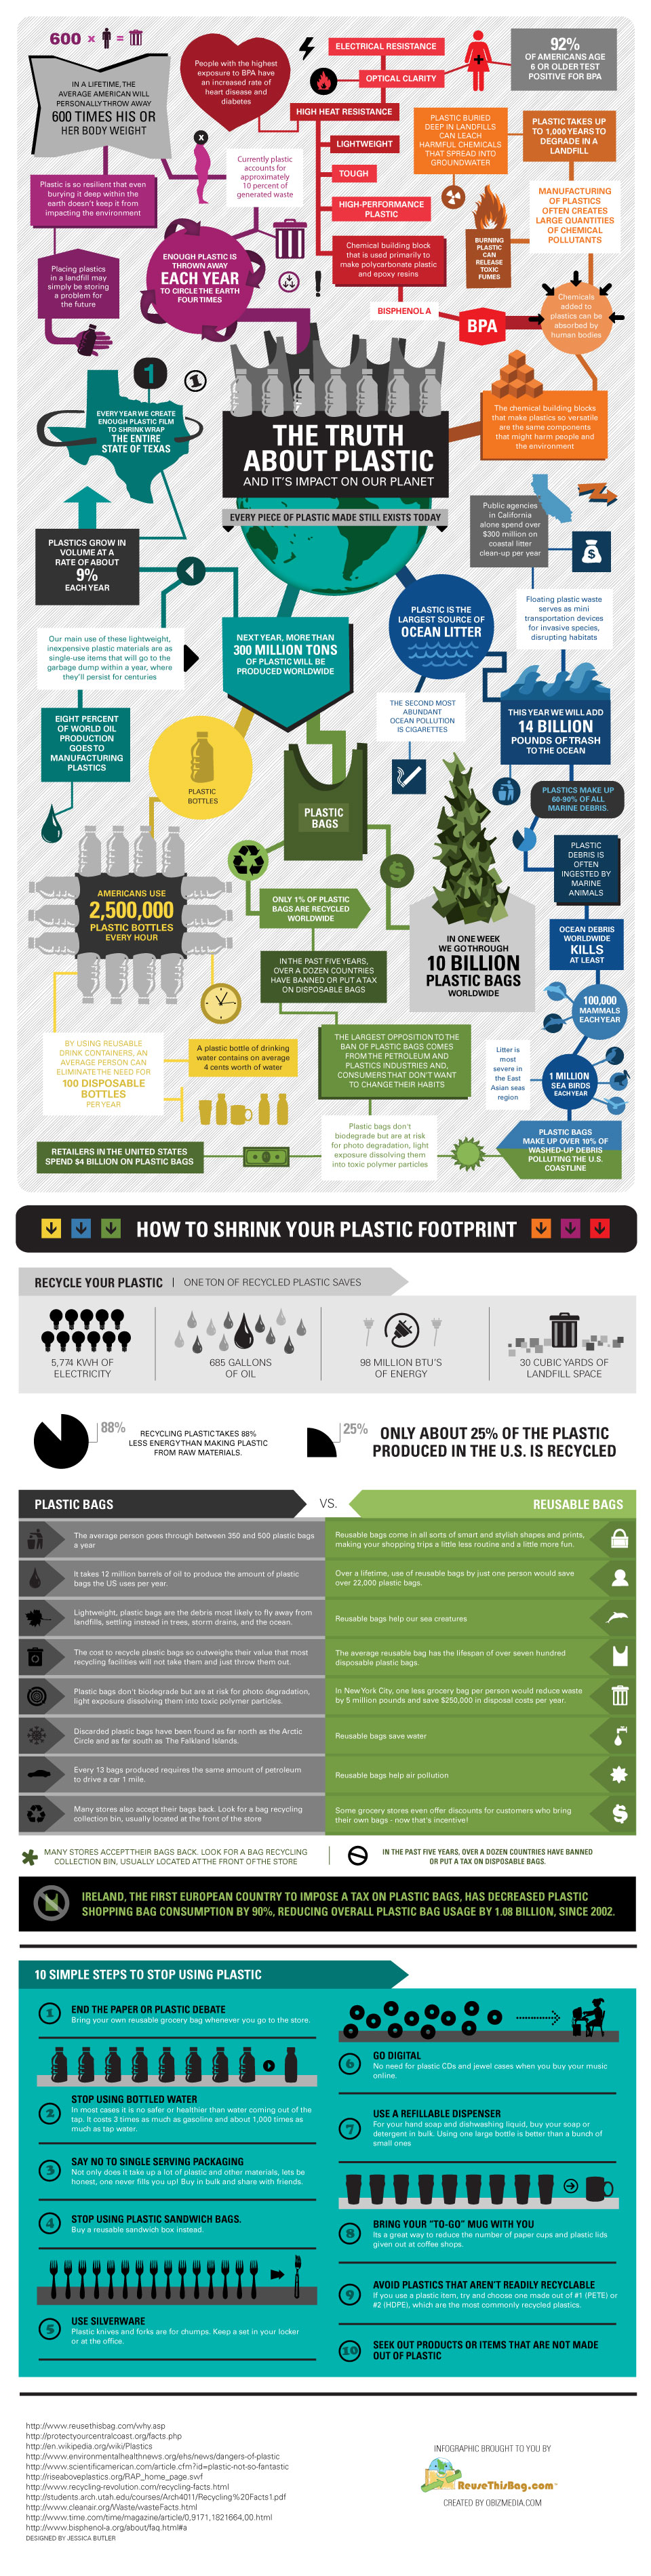 infographic - plastic truth